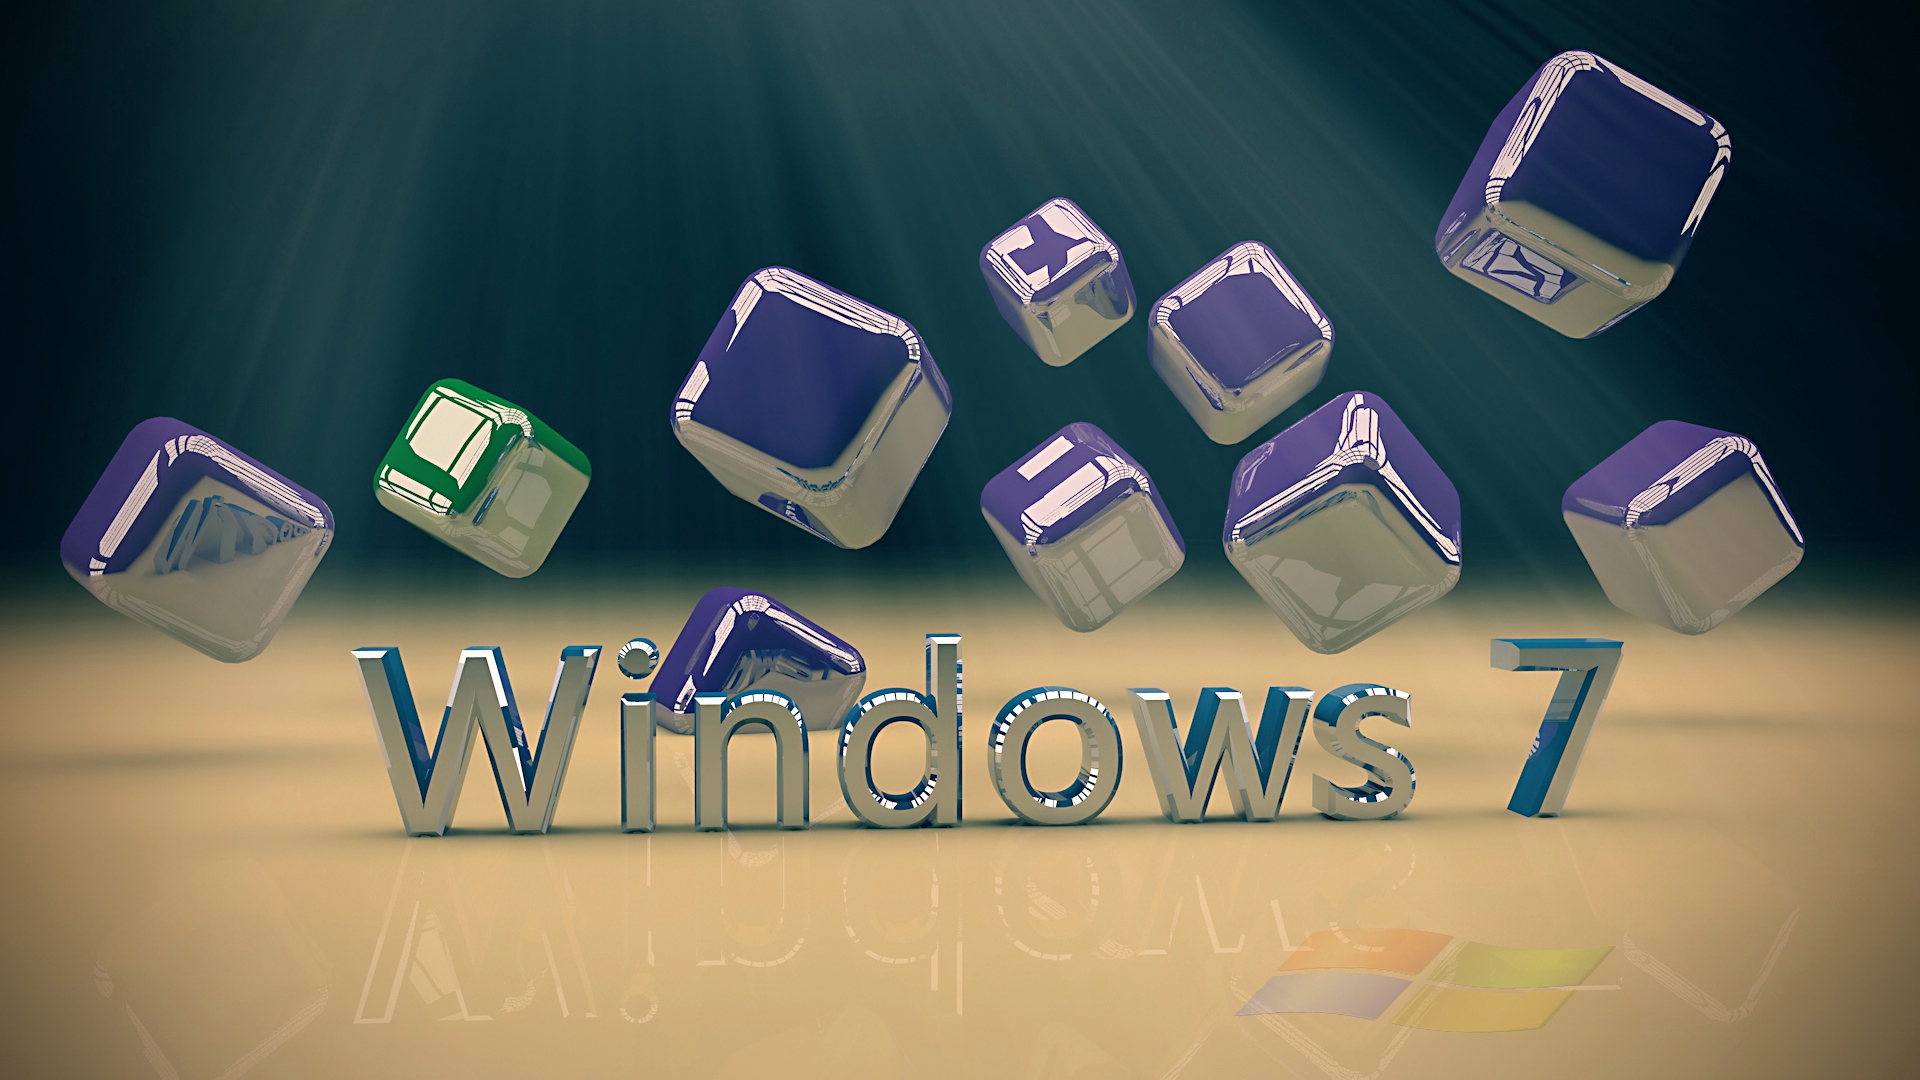 Wallpaper Windows 7, Computer, Operating System, Cube, - Background Desktop Win 7 - HD Wallpaper 